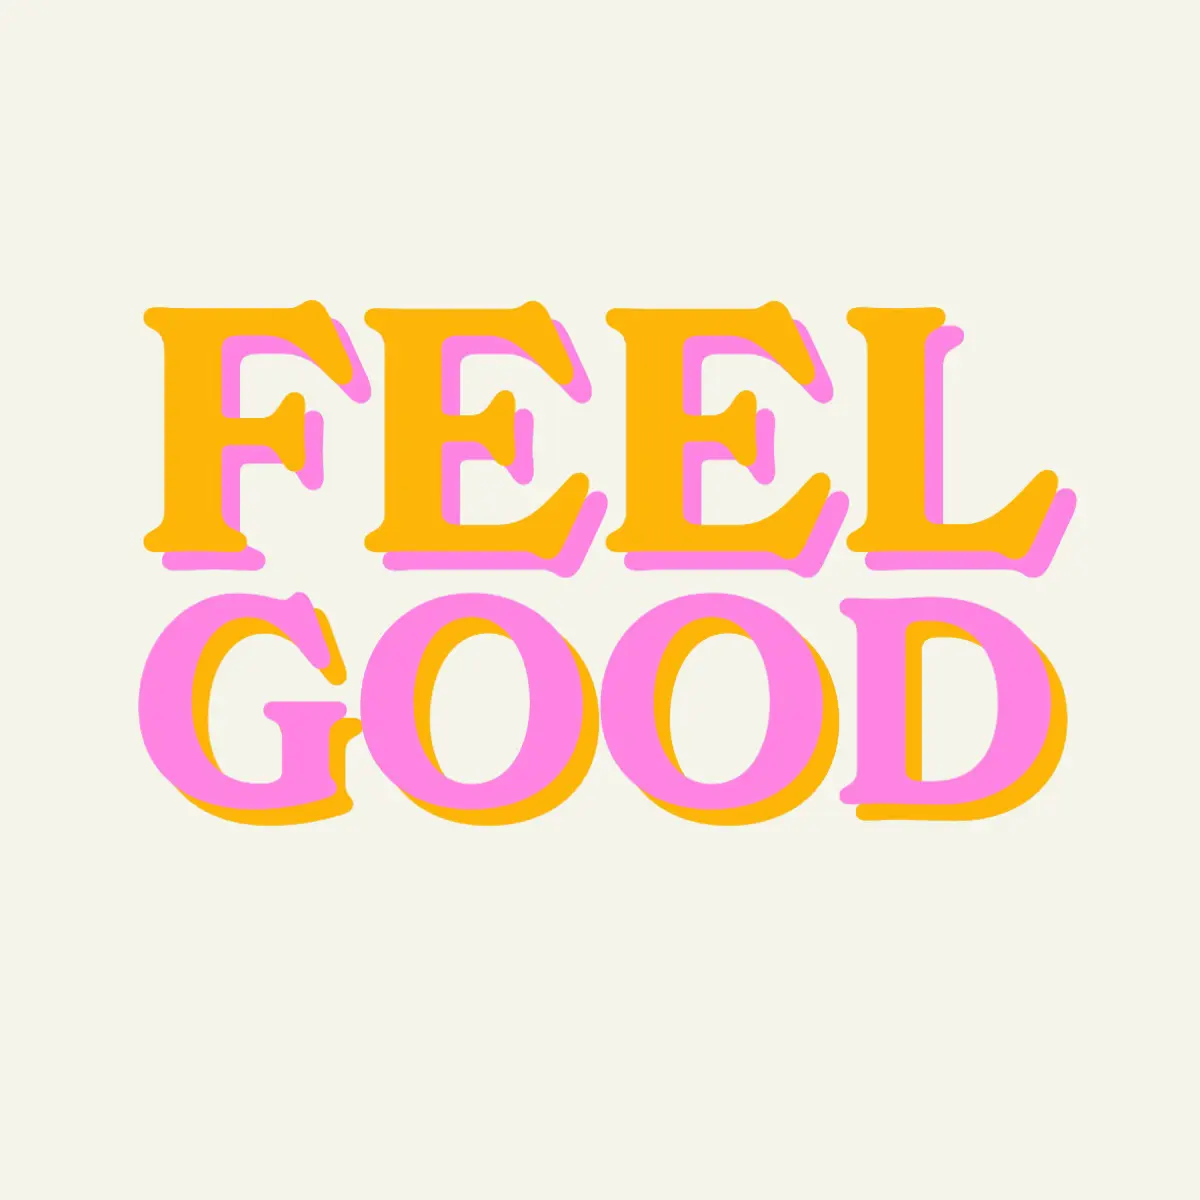 Feel Good